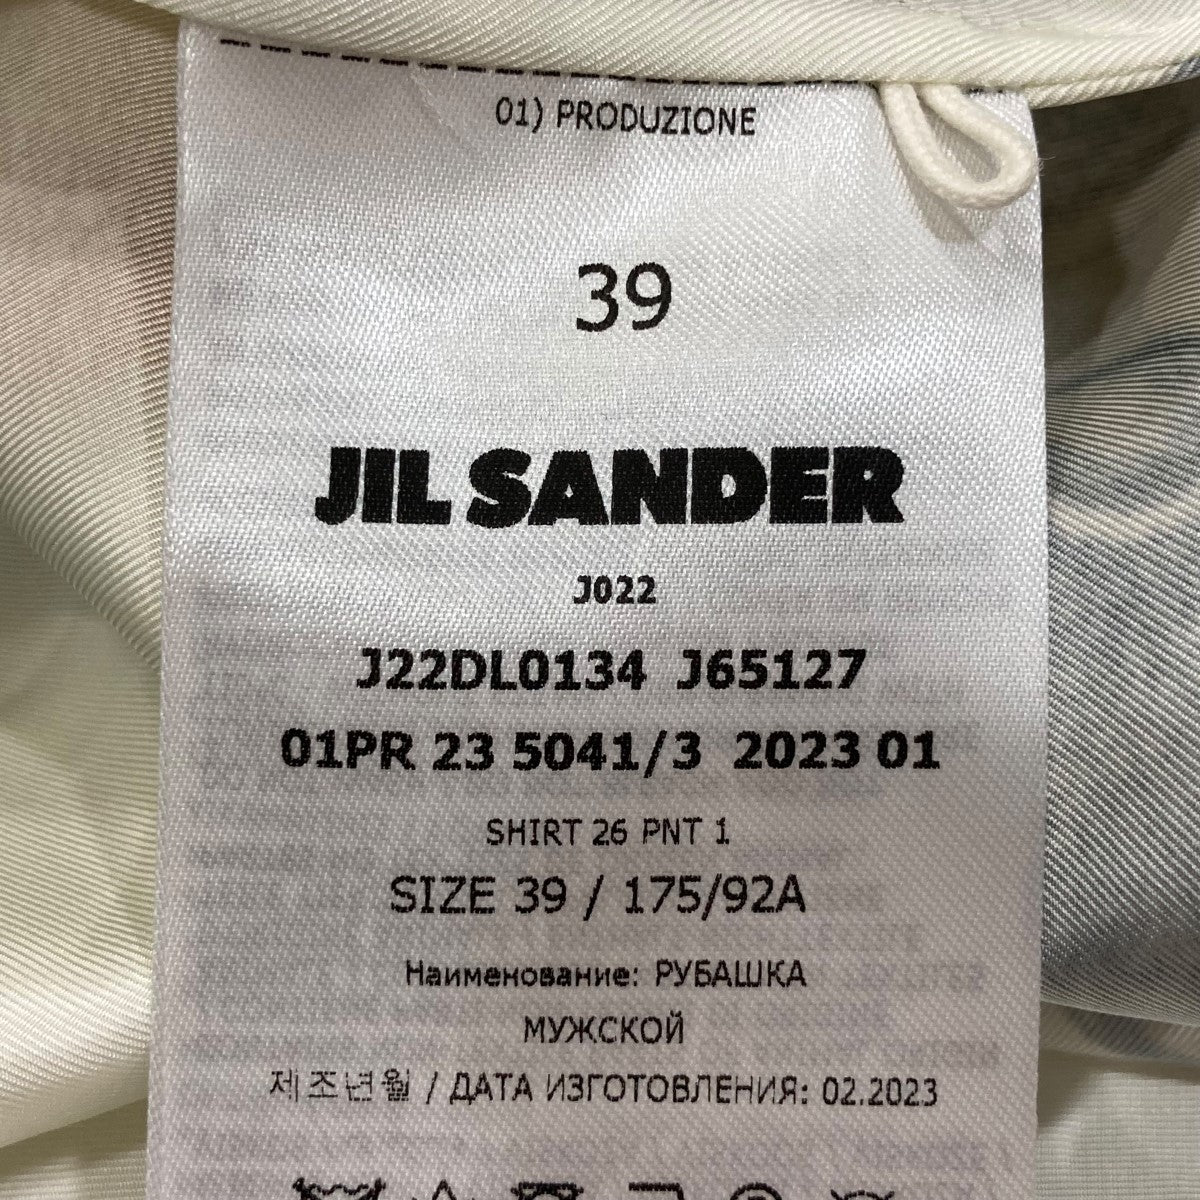 JIL SANDER(ジルサンダー) Objects Print Shirt オープンカラーシャツ 